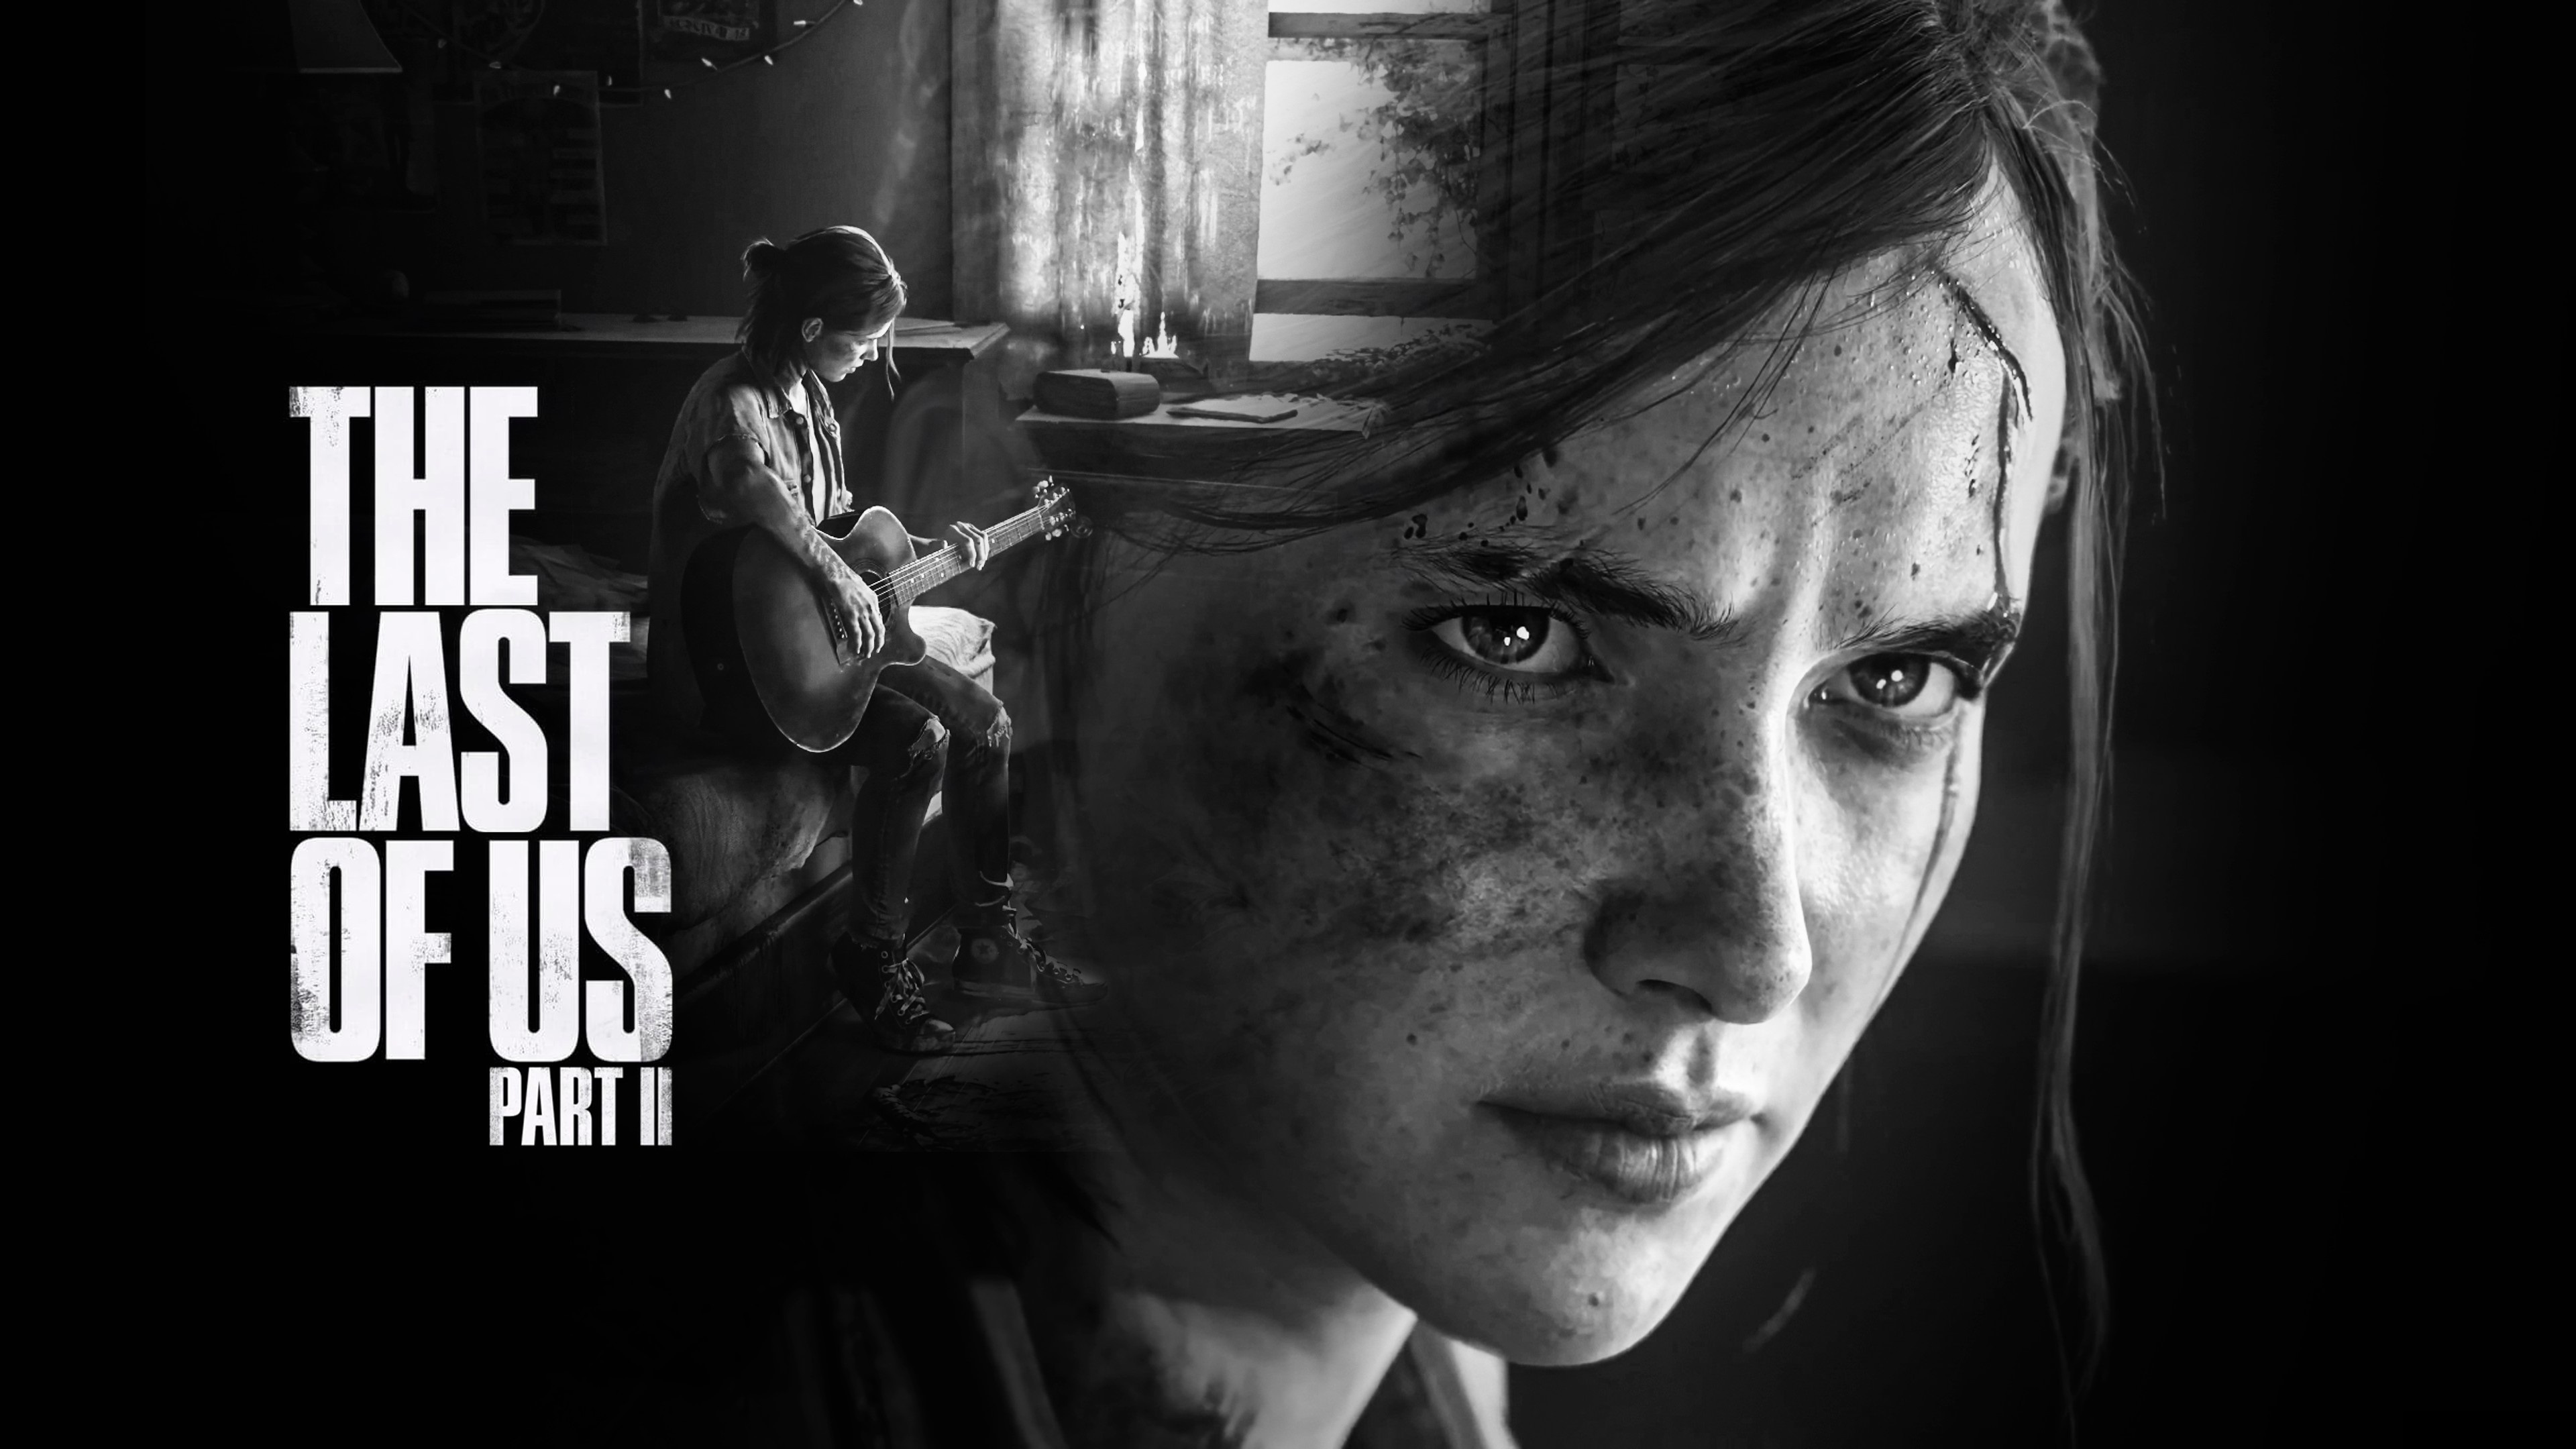 Ellie (The Last of Us) 4k Ultra HD Wallpaper | Background ...